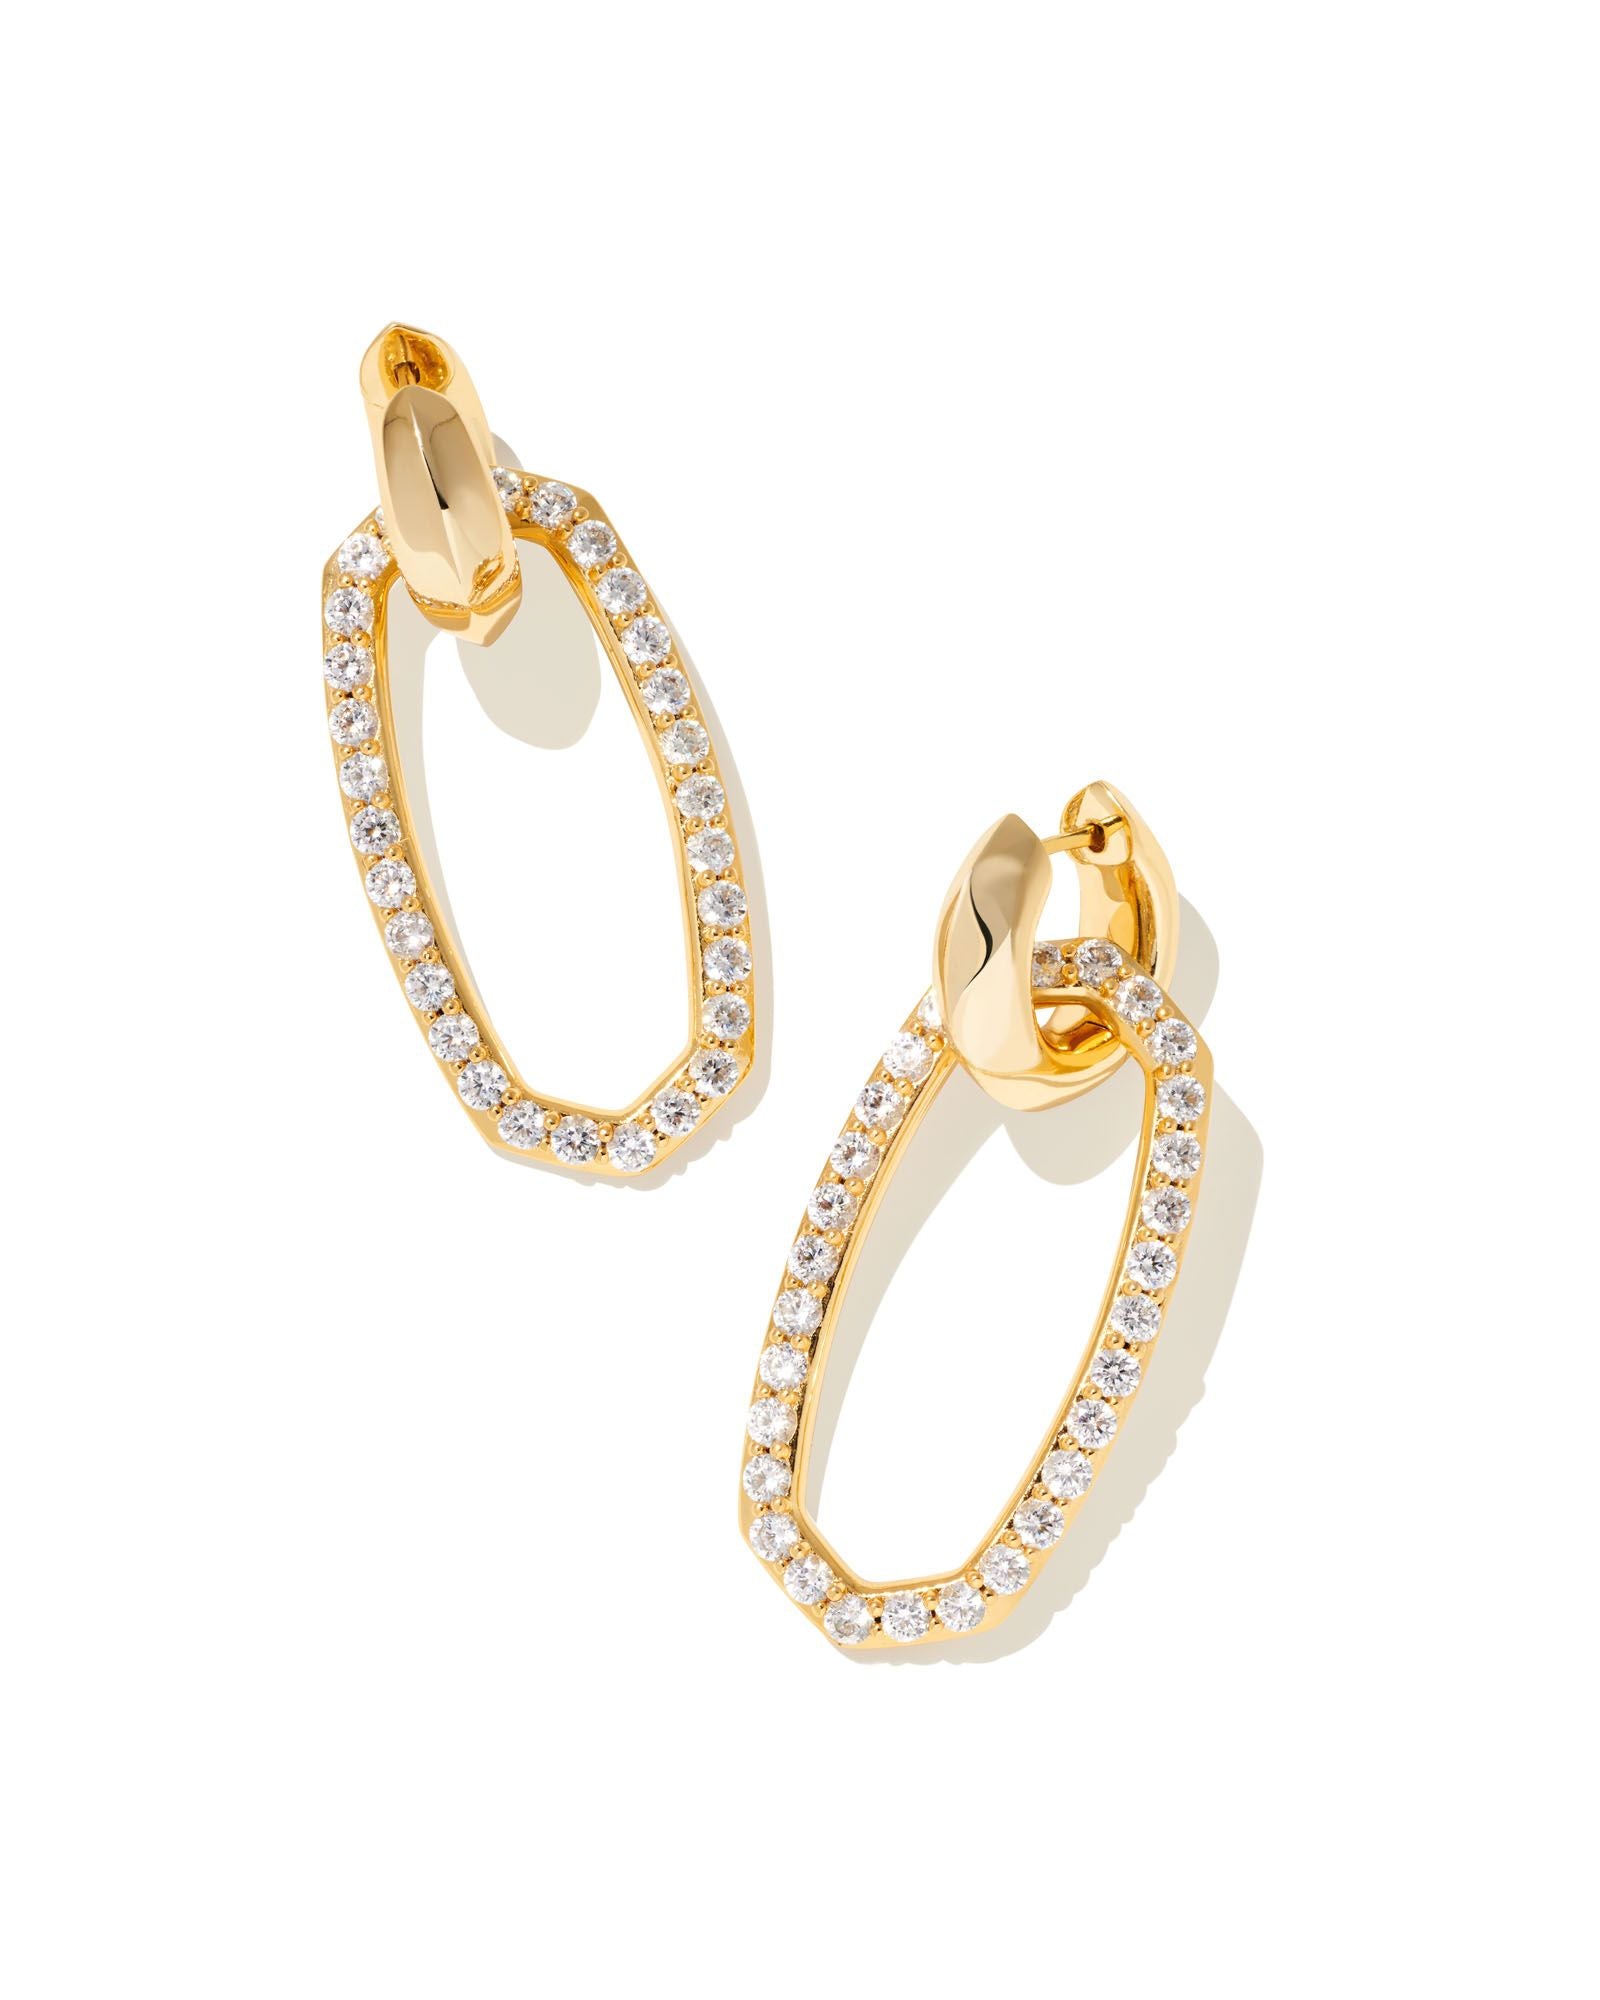 Danielle Link Earring in Gold White Crystal